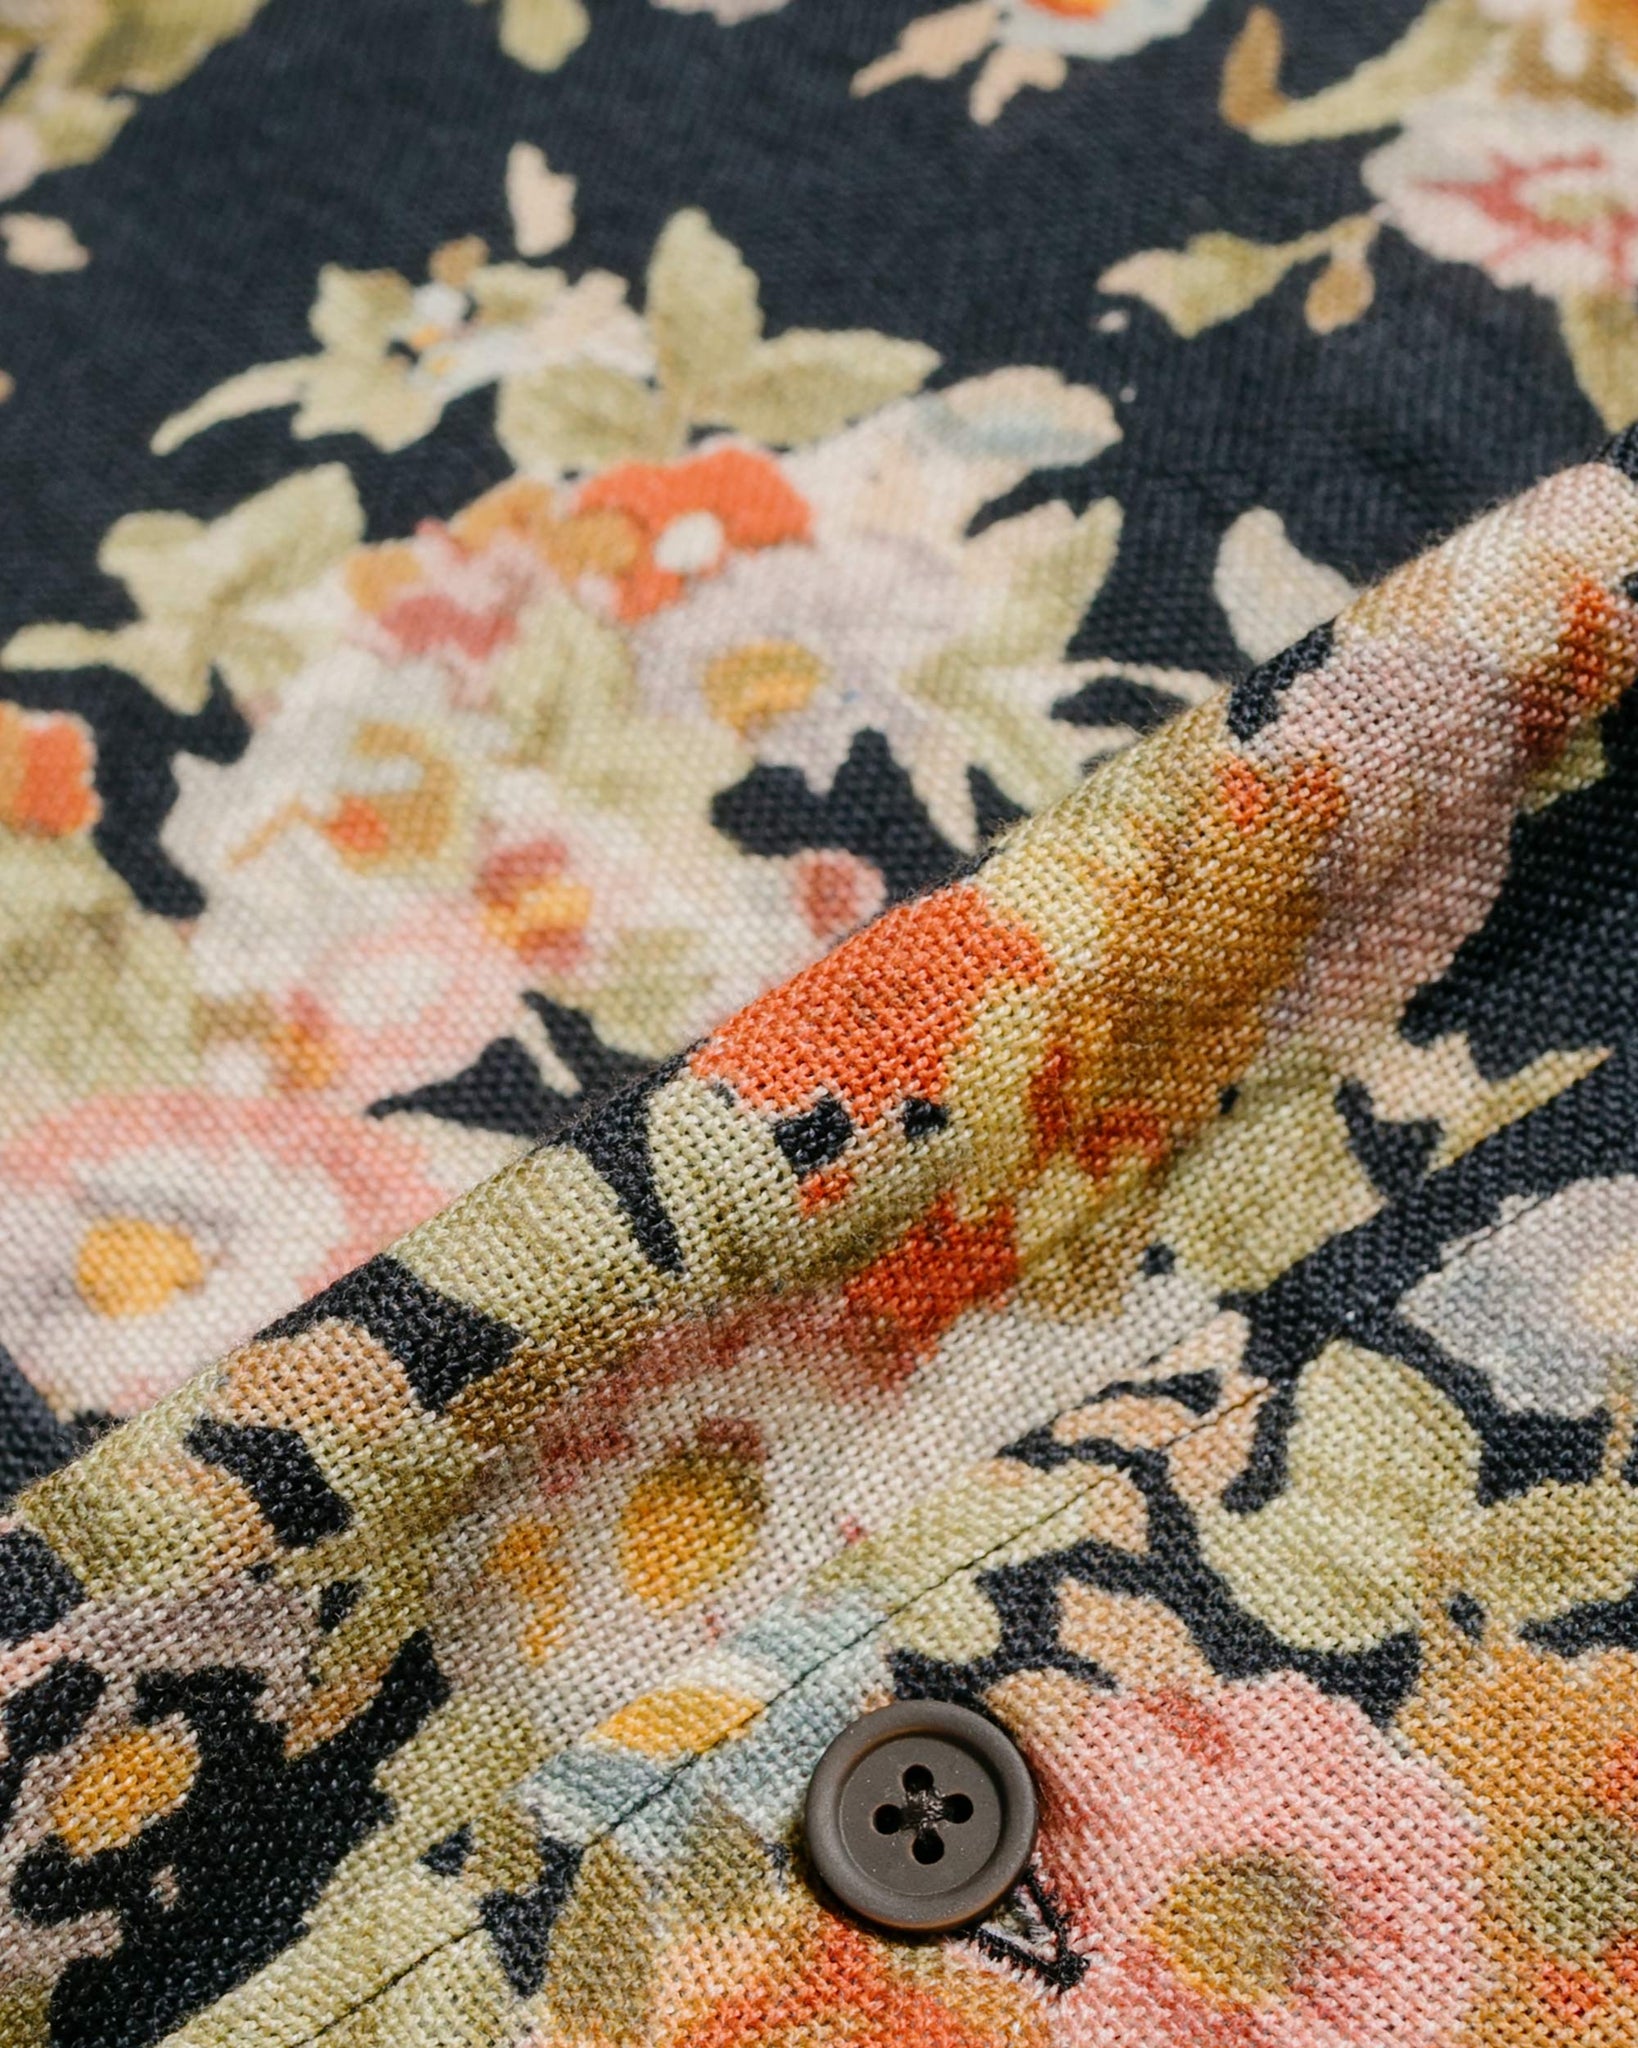 Our Legacy Elder Shirt Shortsleeve Black Floral Tapestry Print fabric